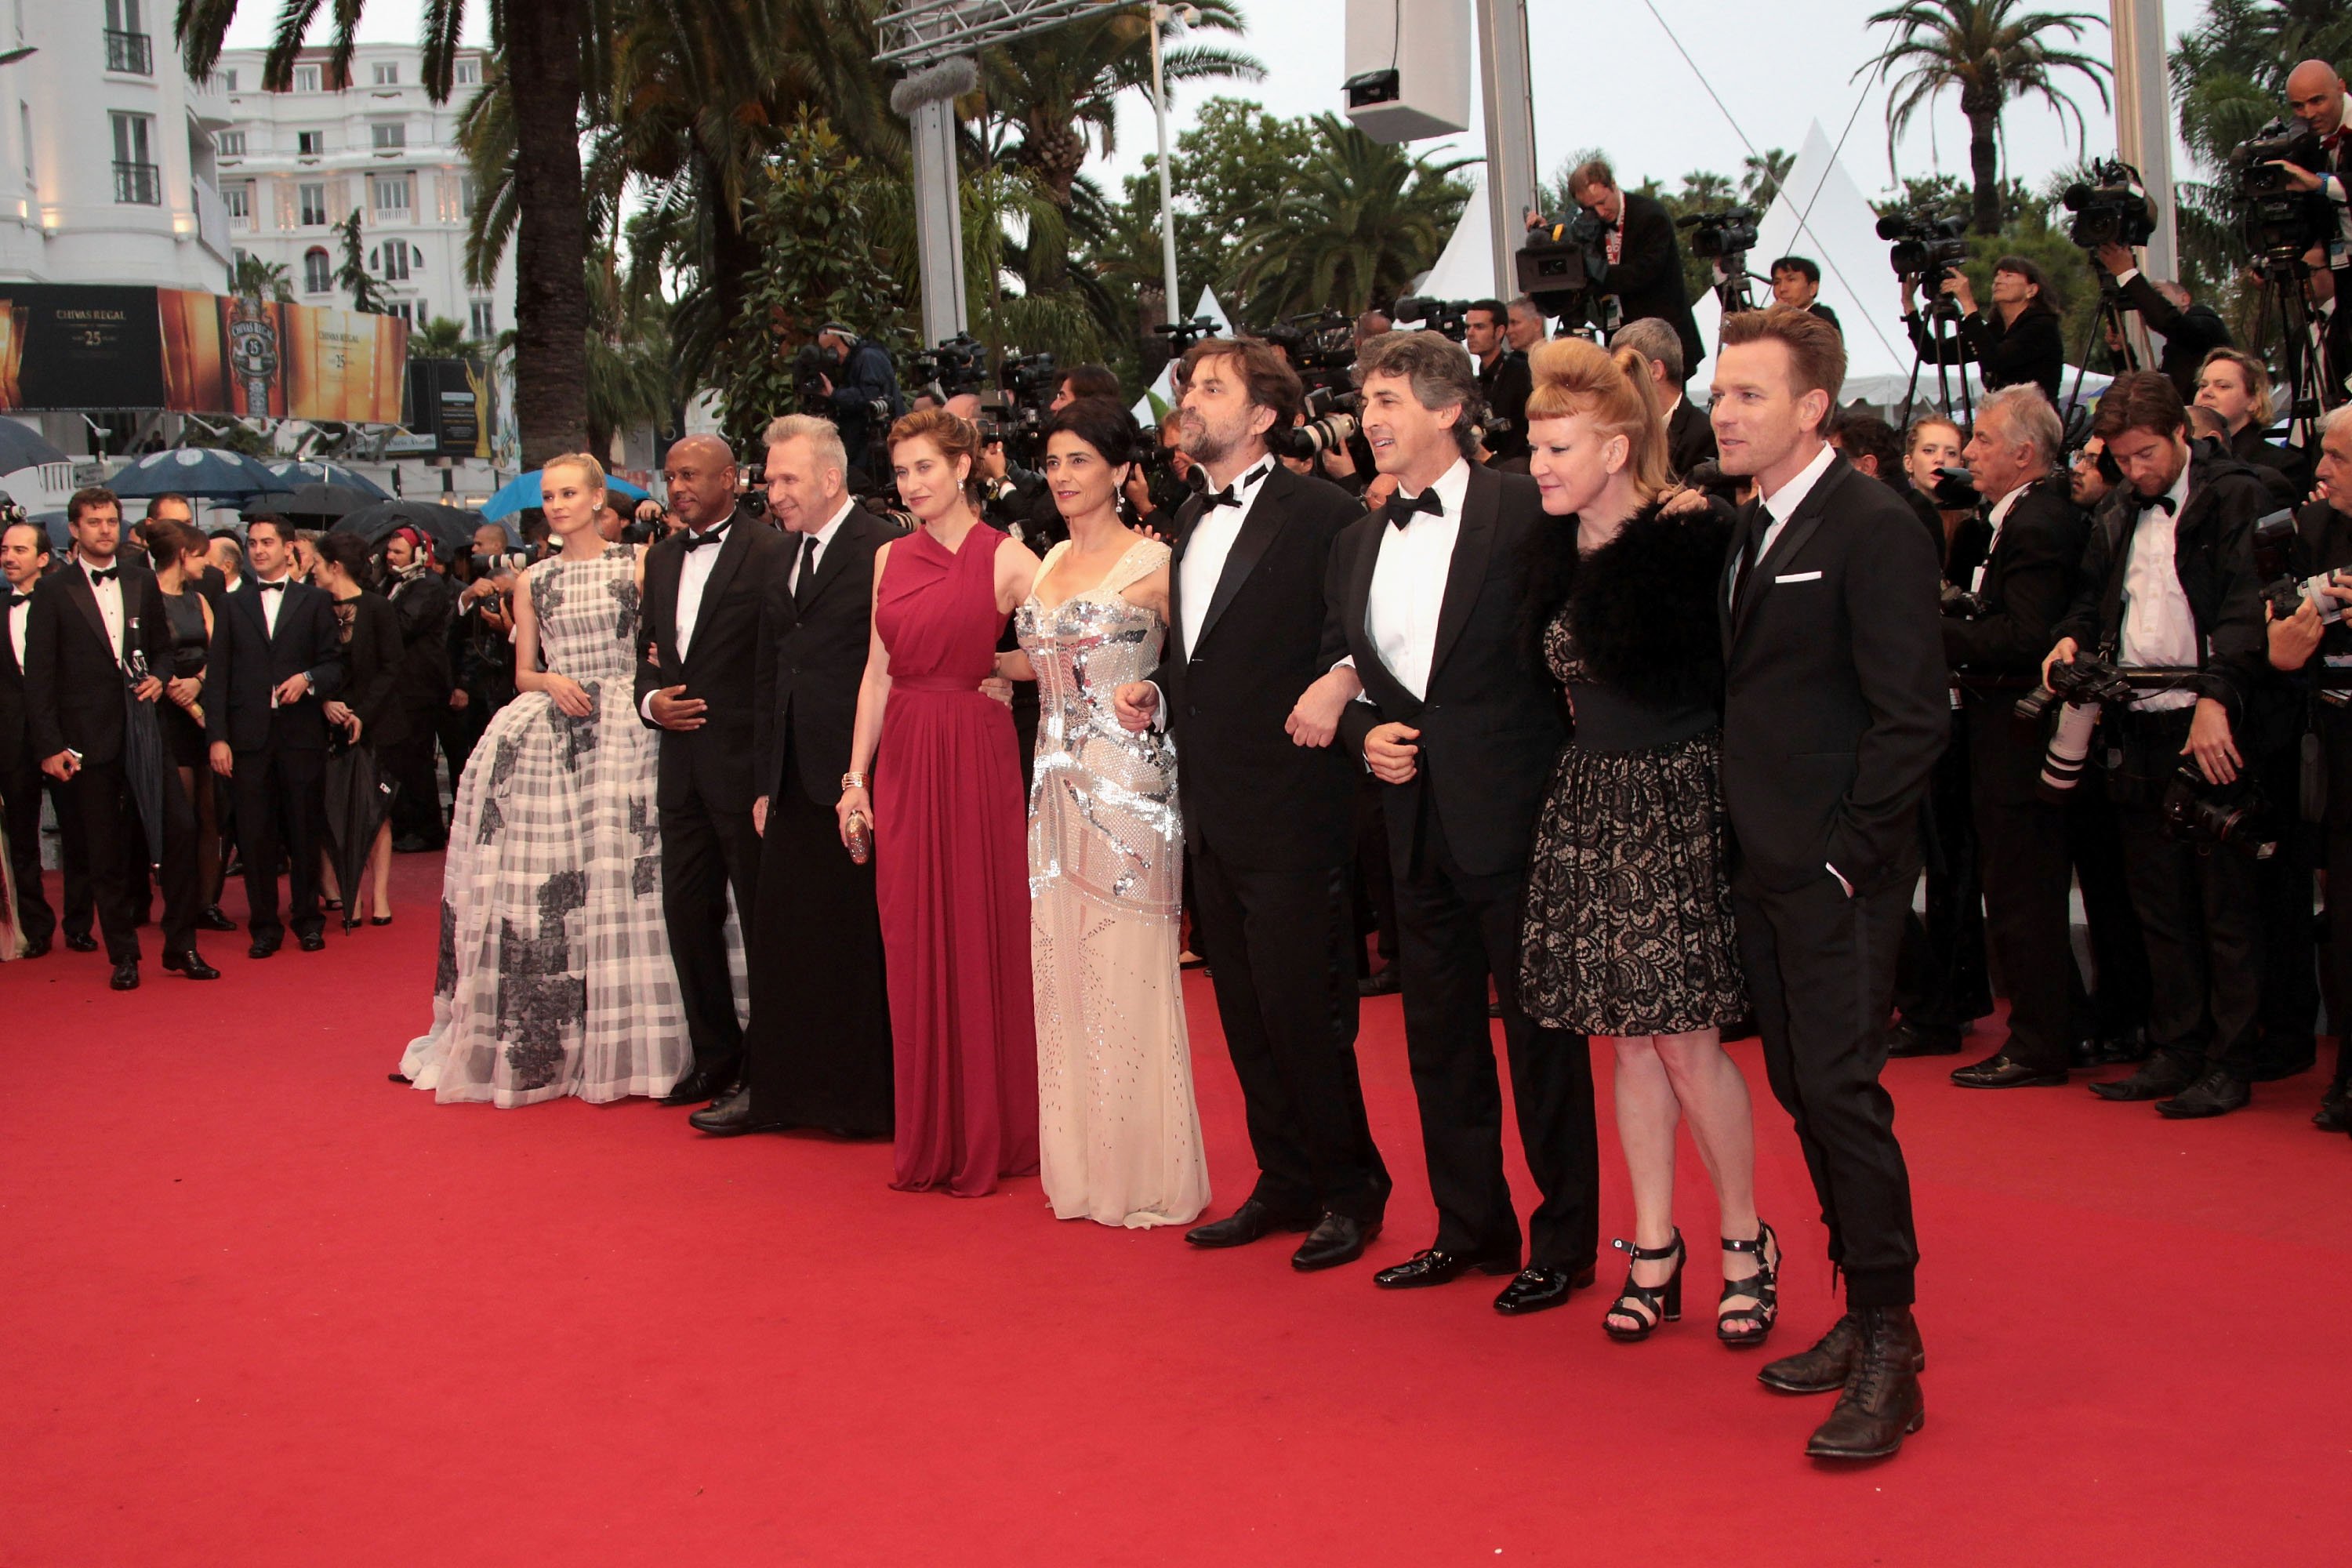 2012-05-27-Cannes-Film-Festival-Closing-Ceremony-034.jpg